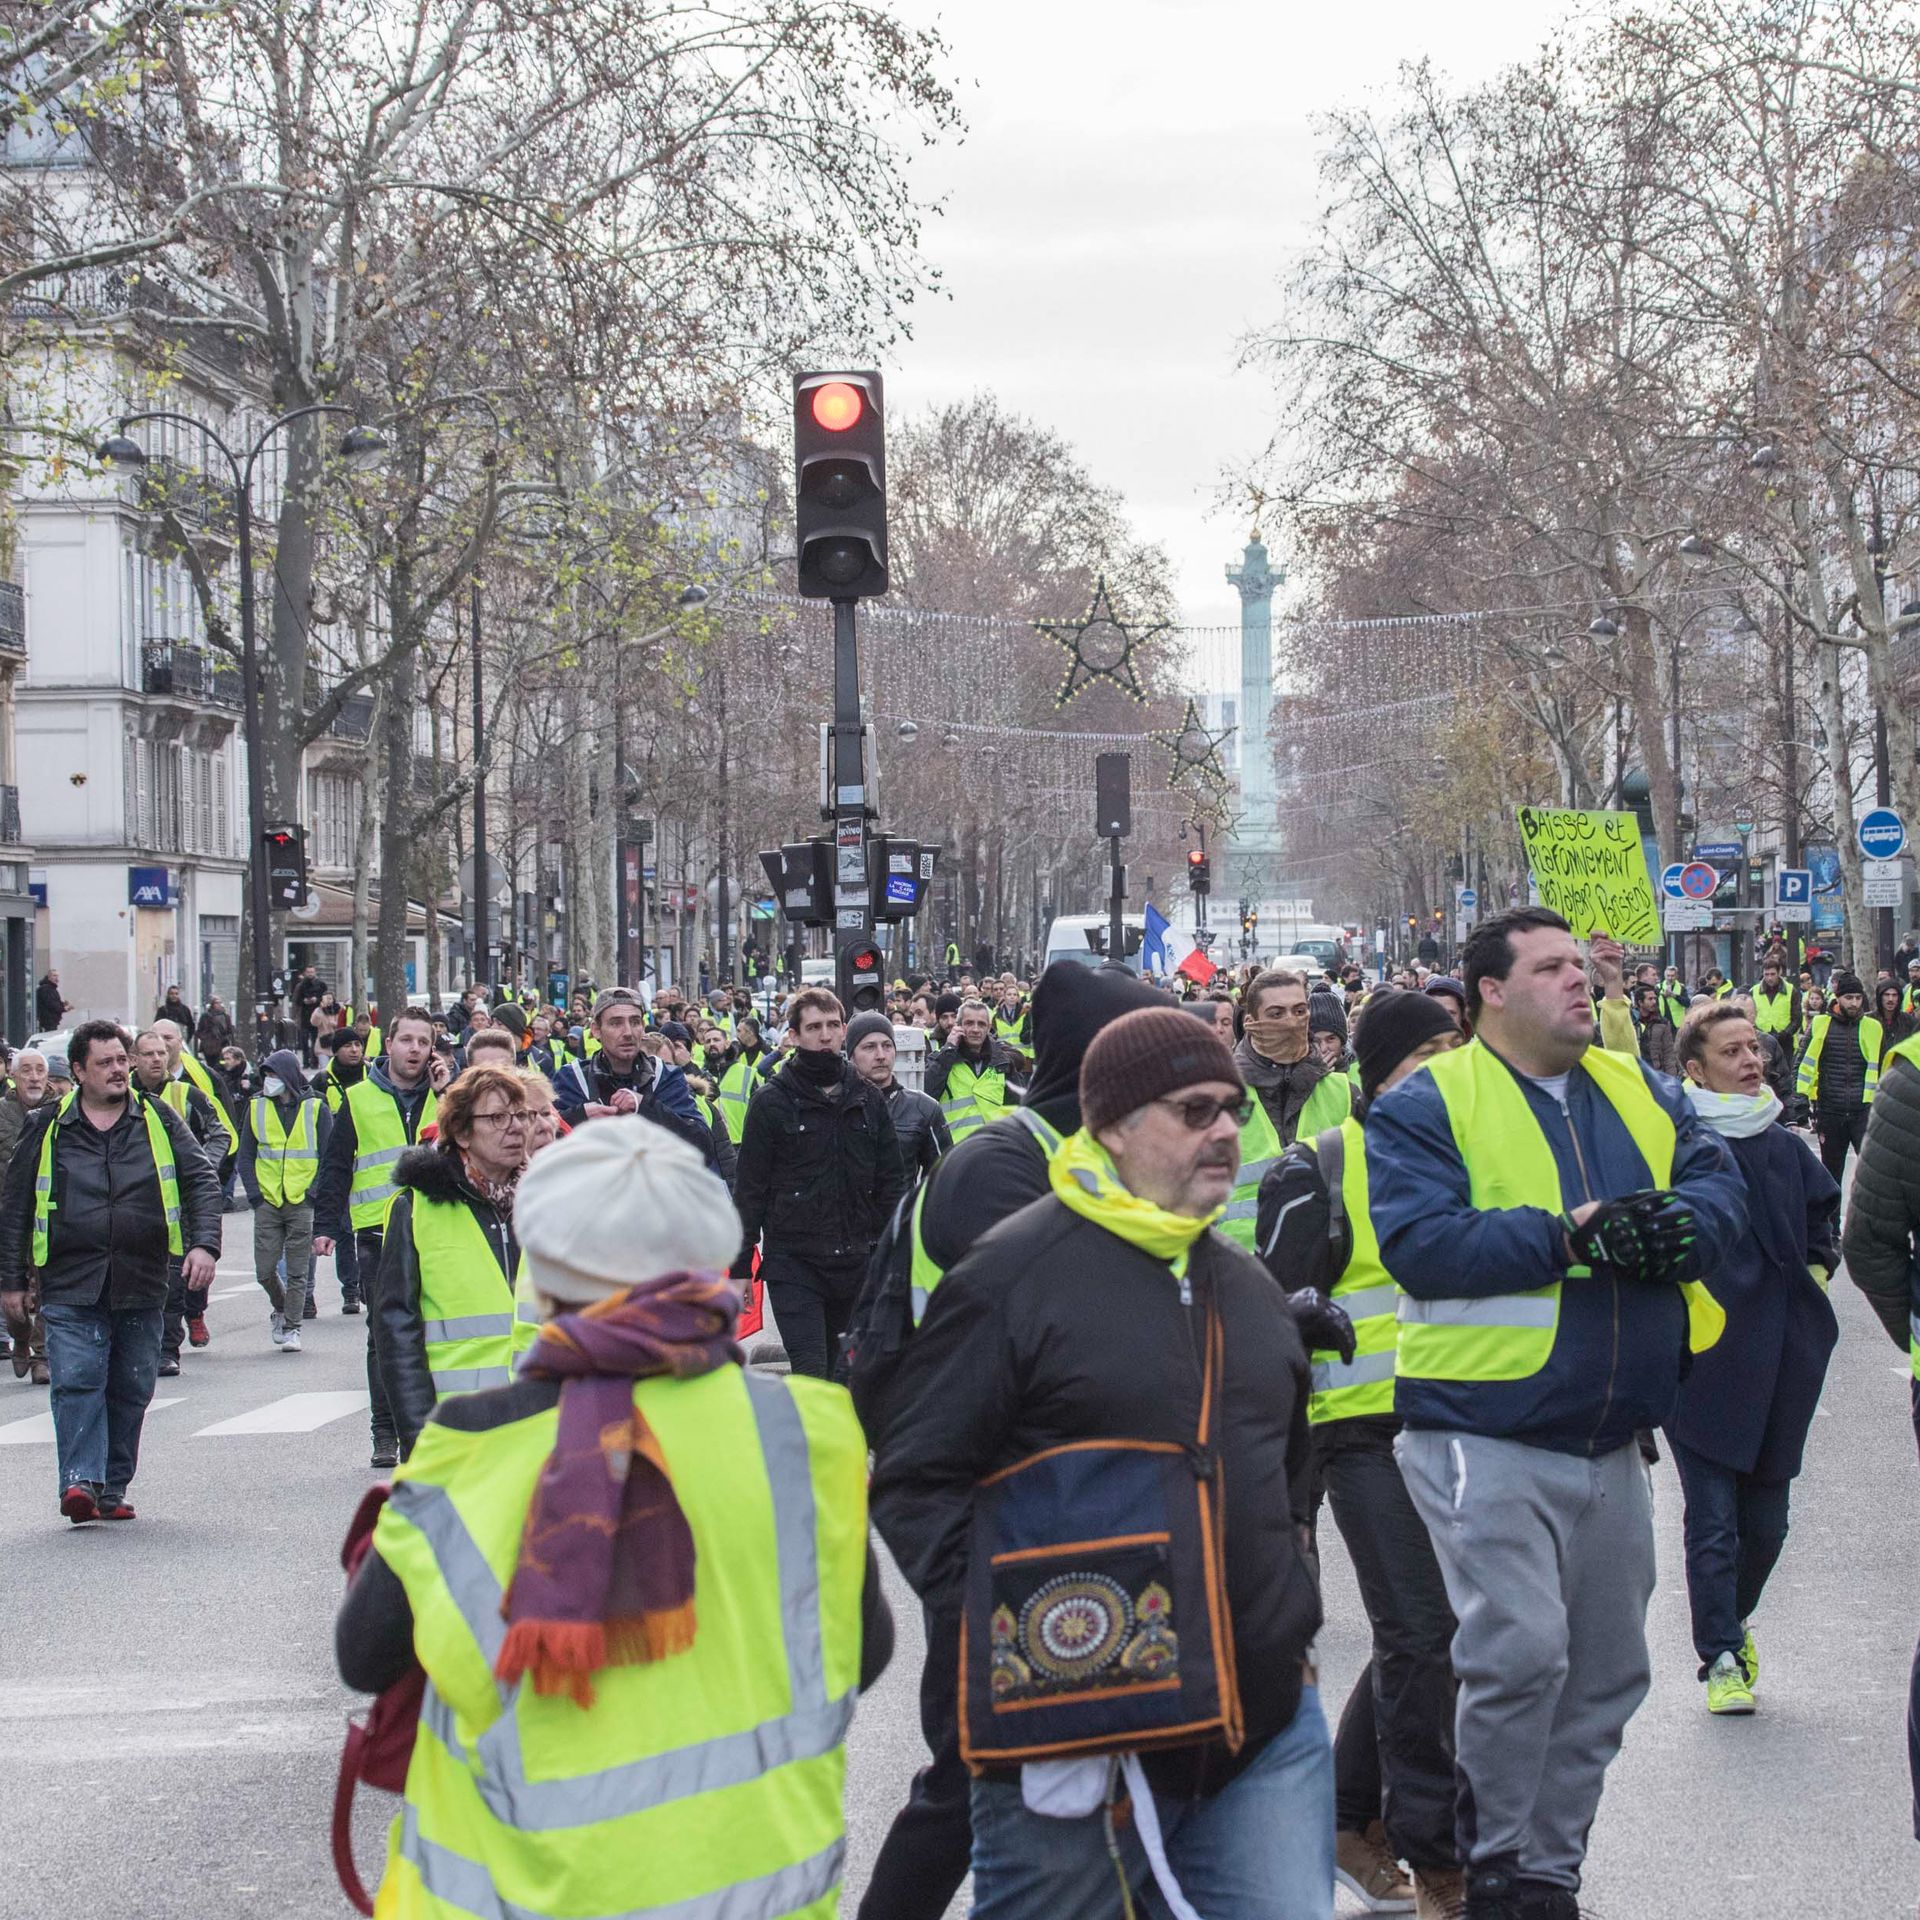 børste Dokument Watt Macron's national address aims to calm fury of Yellow Vest protests